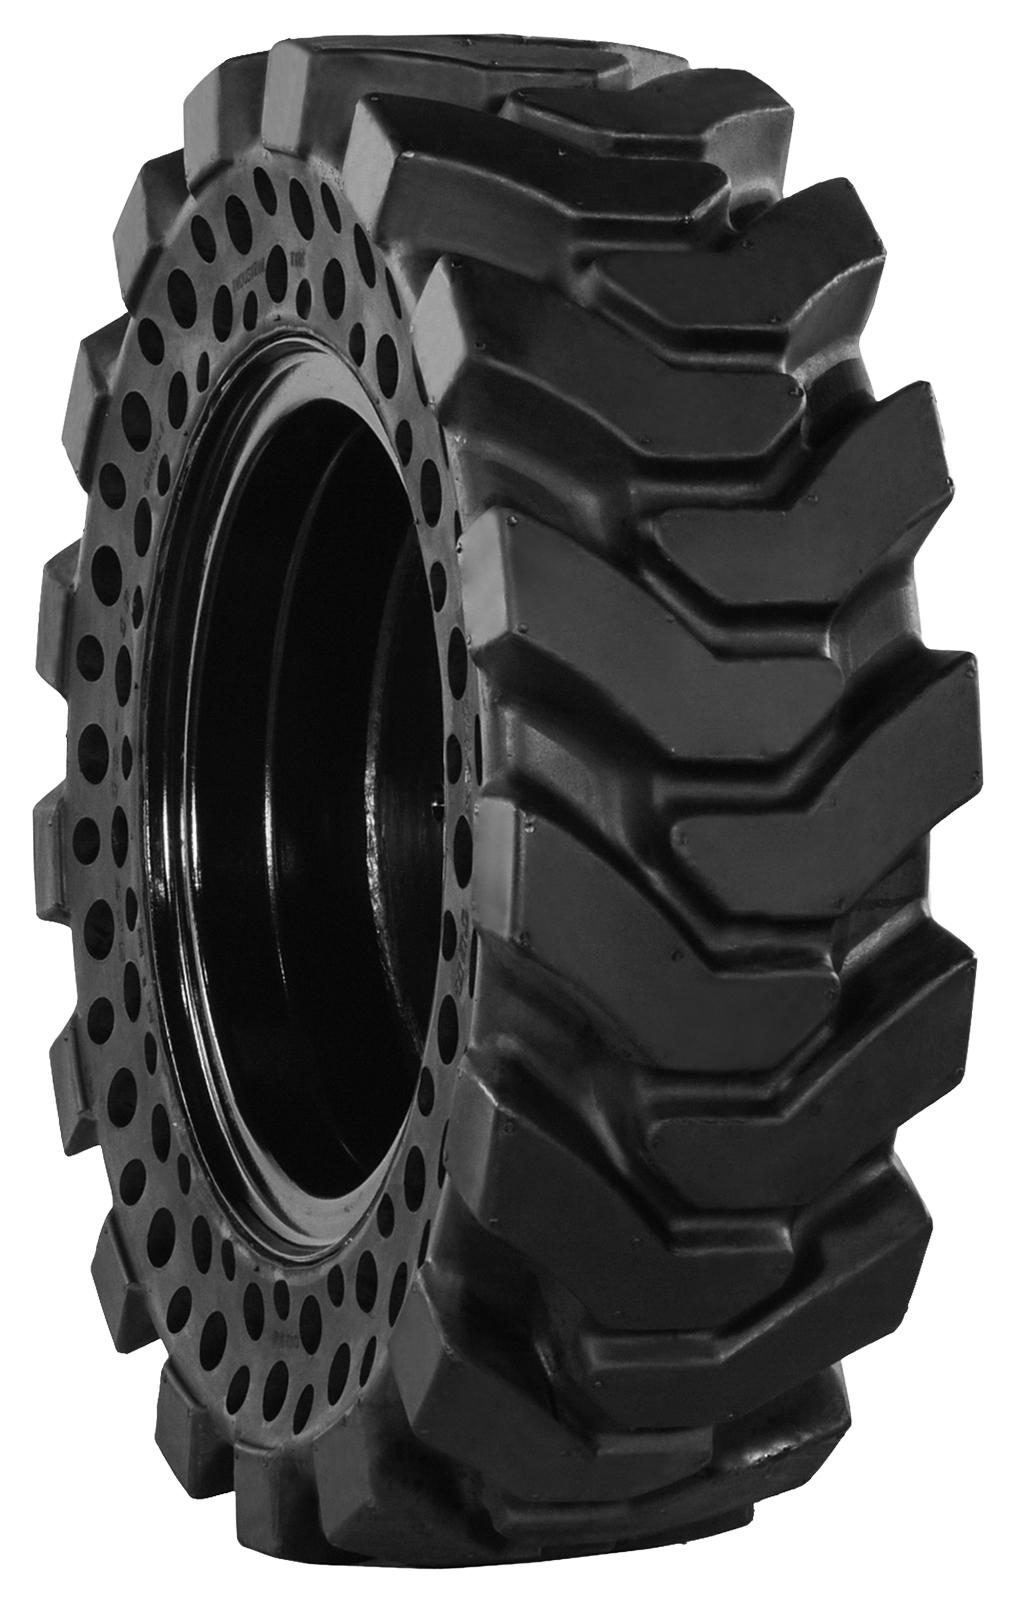 set of 4 30x10-16 (10x16.5) heavy duty solid dura-flex skid steer tires with 8x8 rim